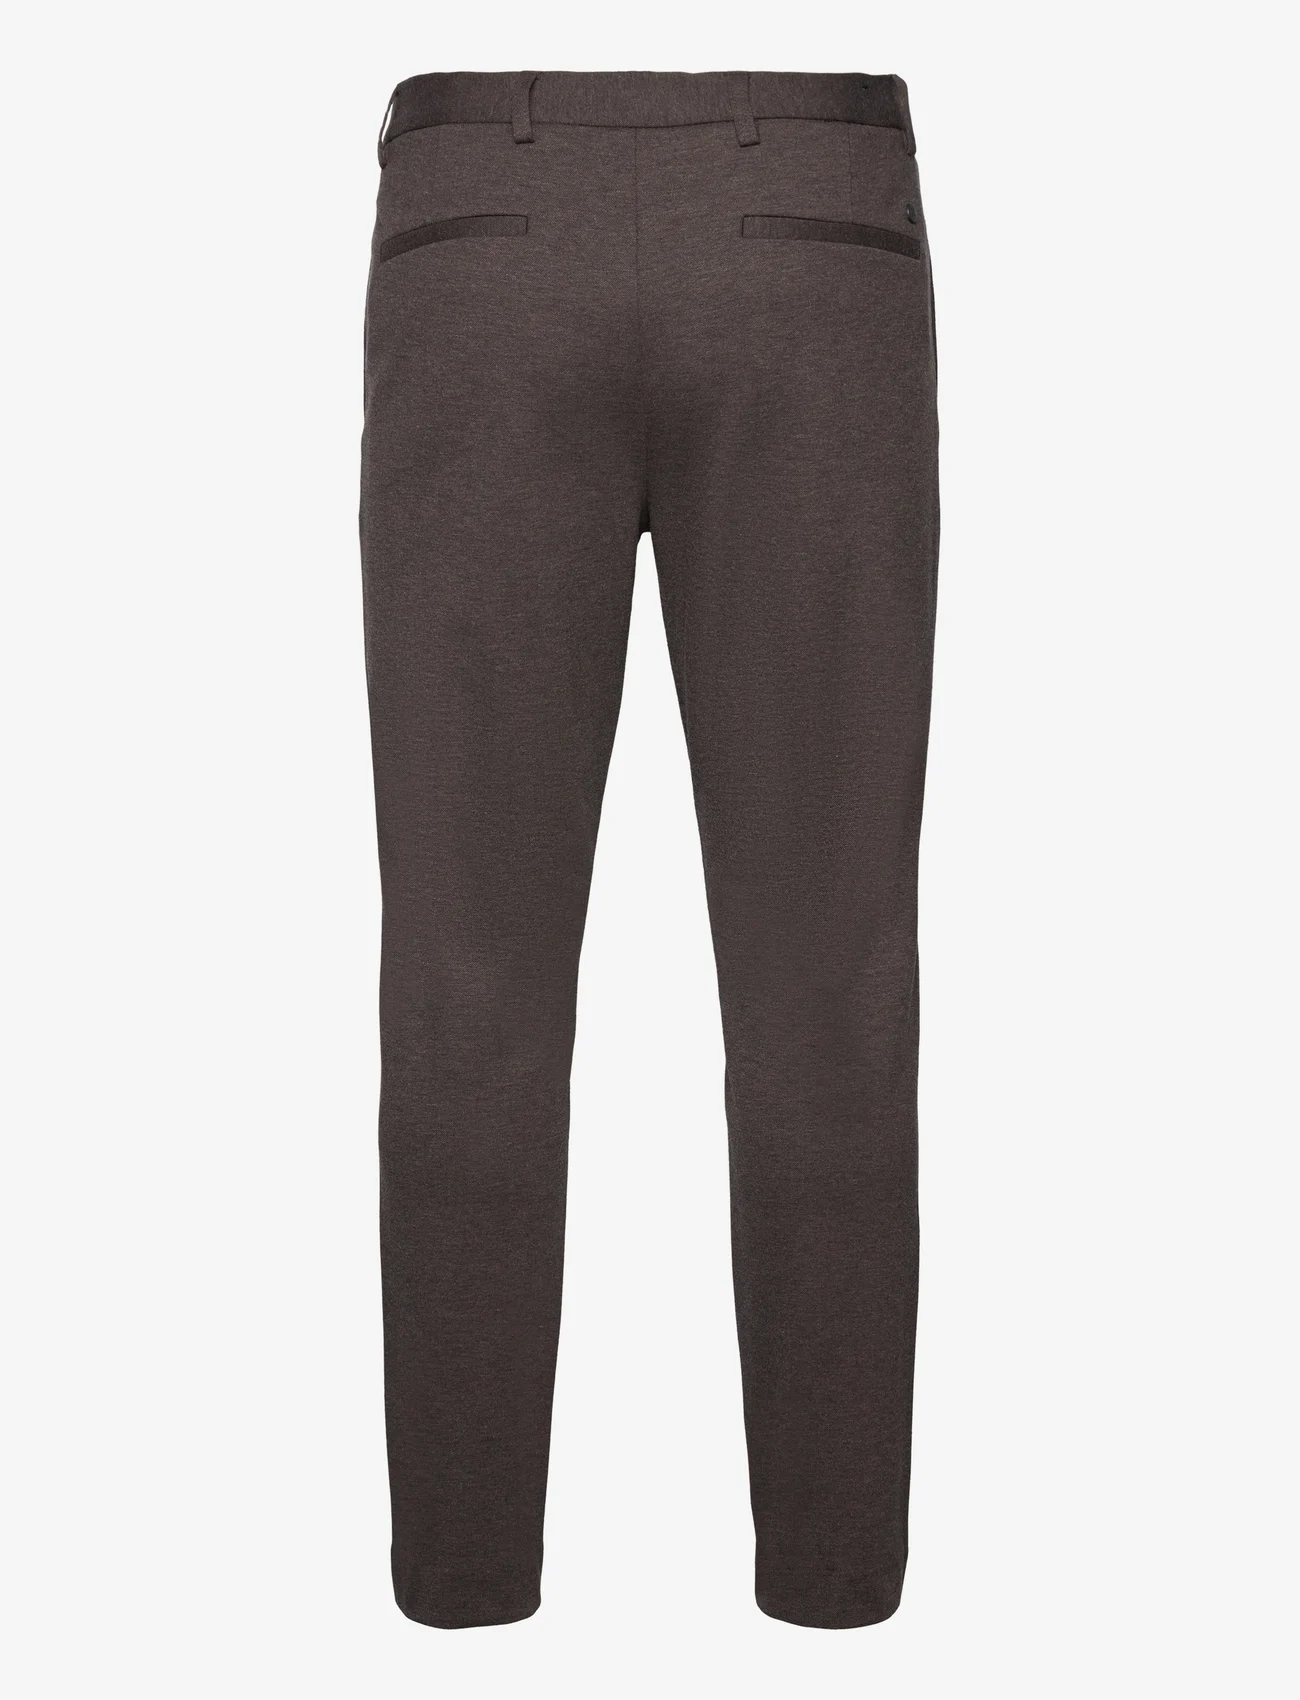 Clean Cut Copenhagen - Milano Jersey Pants - kostiumo kelnės - brown melangÈ - 1